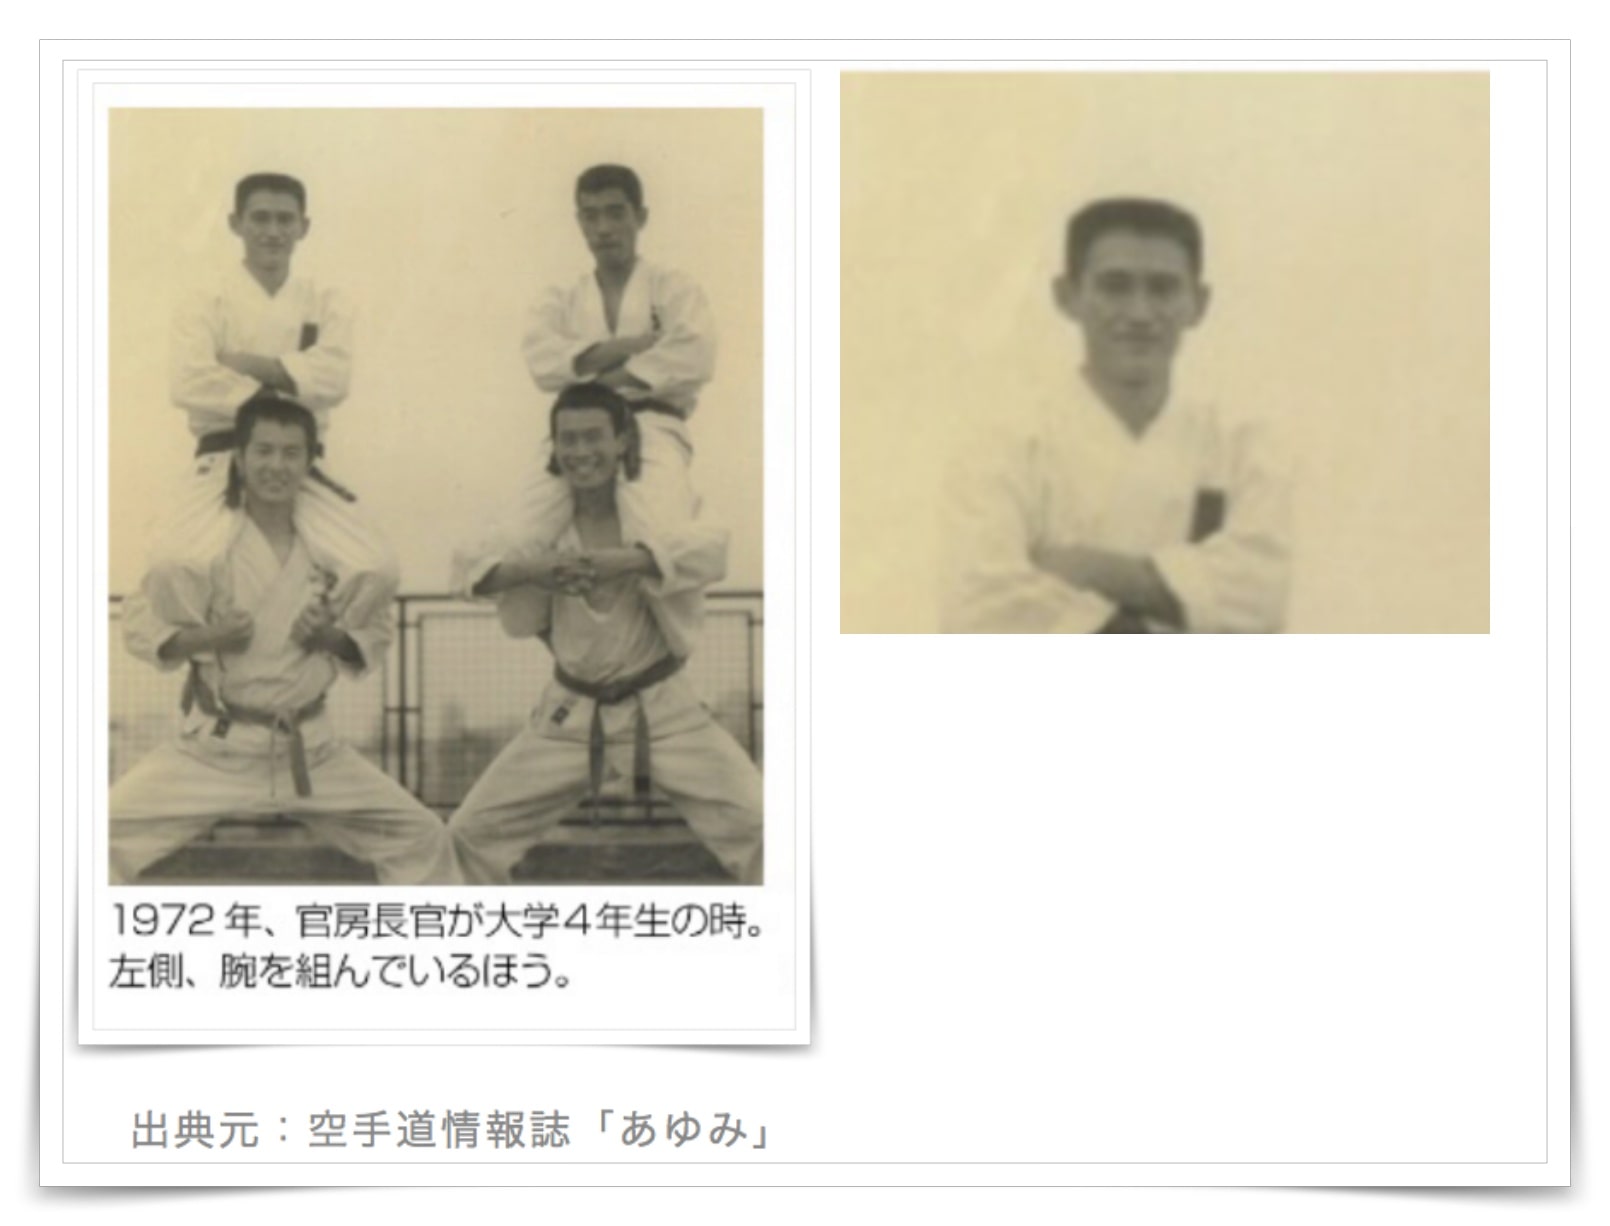 菅義偉官房長官、総理大臣の若い頃の画像